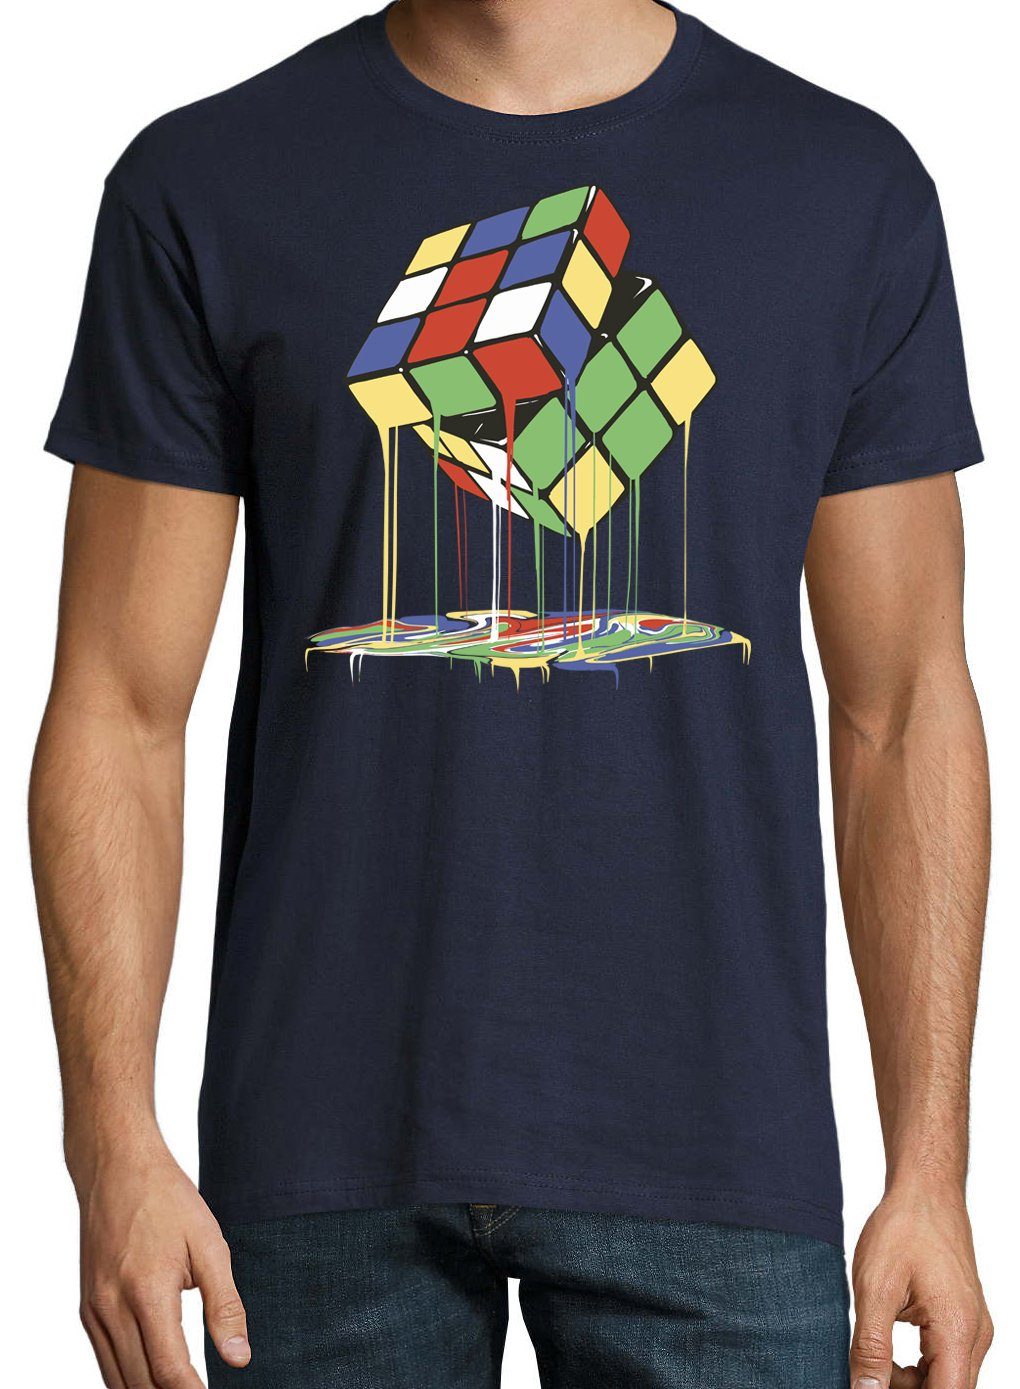 Shirt Herren T-Shirt Frontdruck Melting Trendigem Youth Designz Magic Navy mit Cube